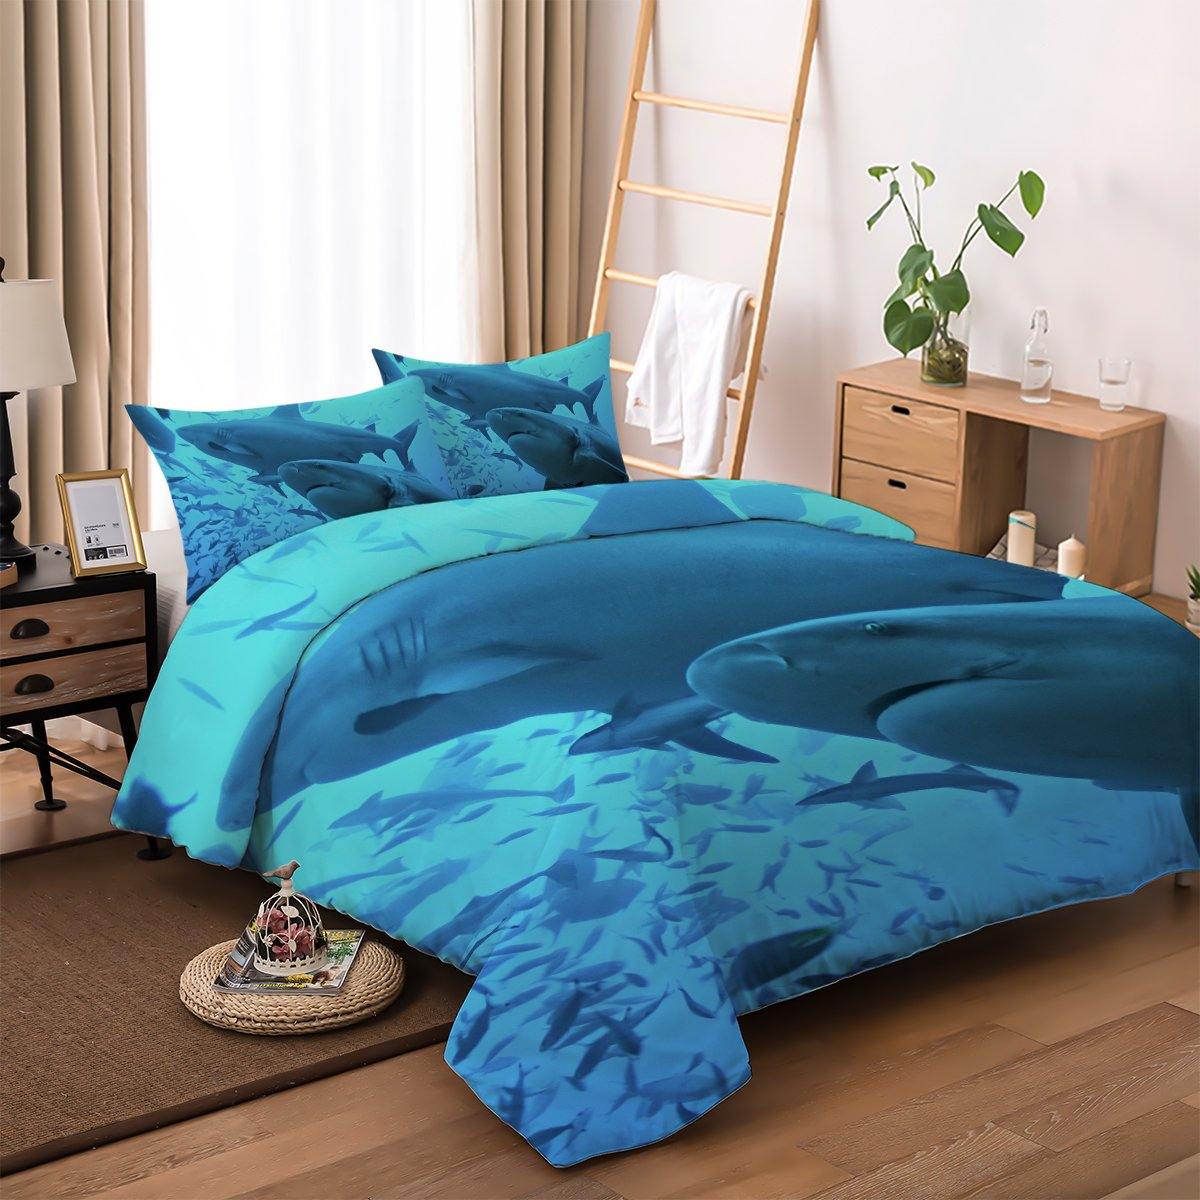 WONGS BEDDING Big Shark Bedding Bedroom Home Kit - Wongs bedding